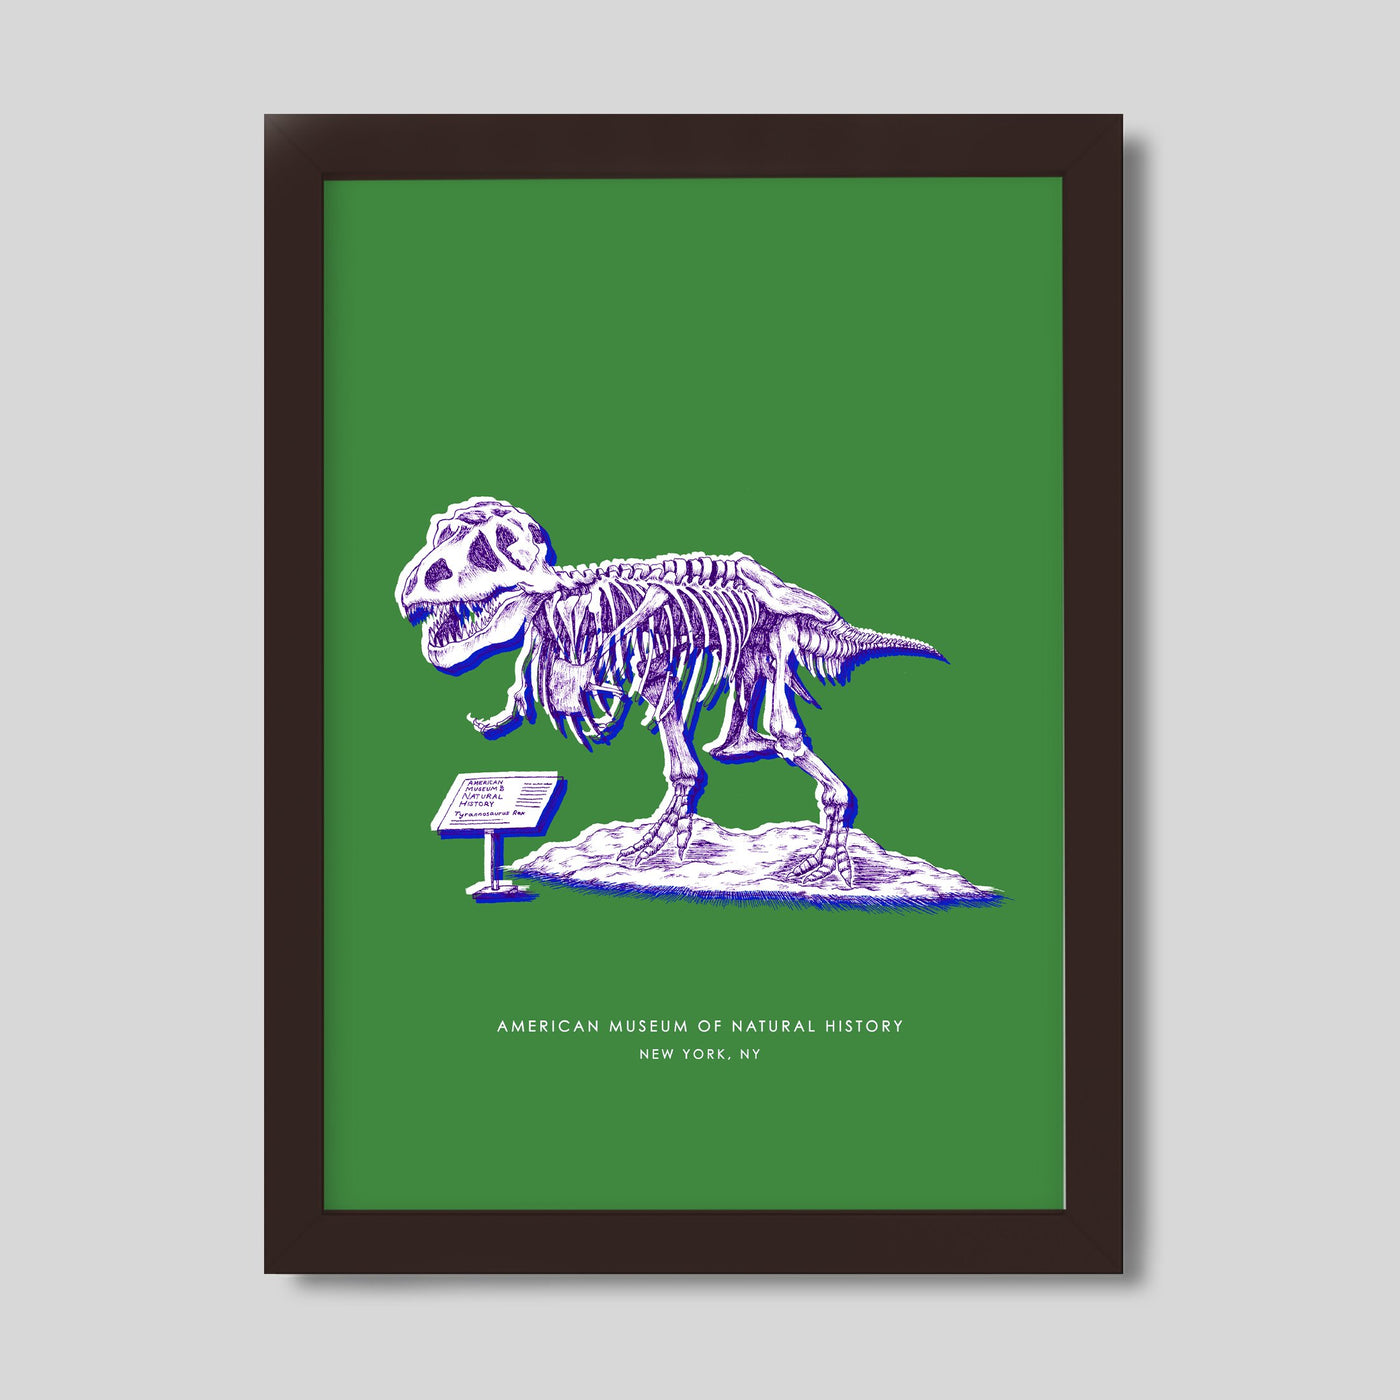 Gallery Prints Green Print / 8x10 / Walnut Frame New York Dinosaur Print Katie Kime